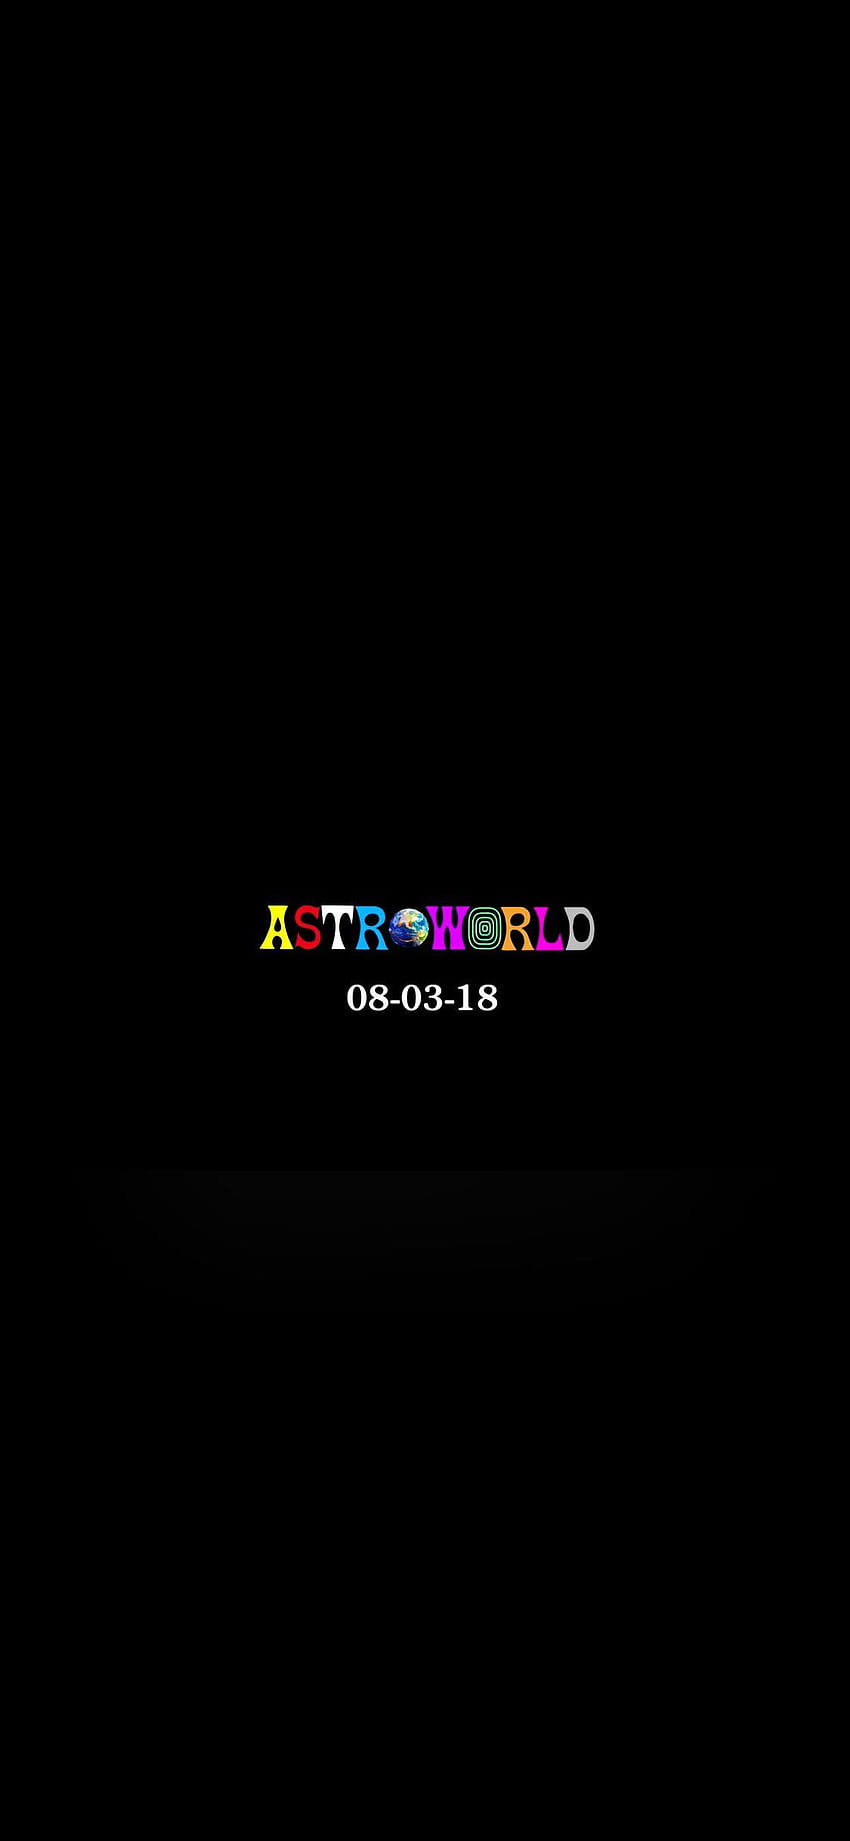 Astroworld from Apple Music trailer (iPhone X) : travisscott, Cool Astroworld HD phone wallpaper